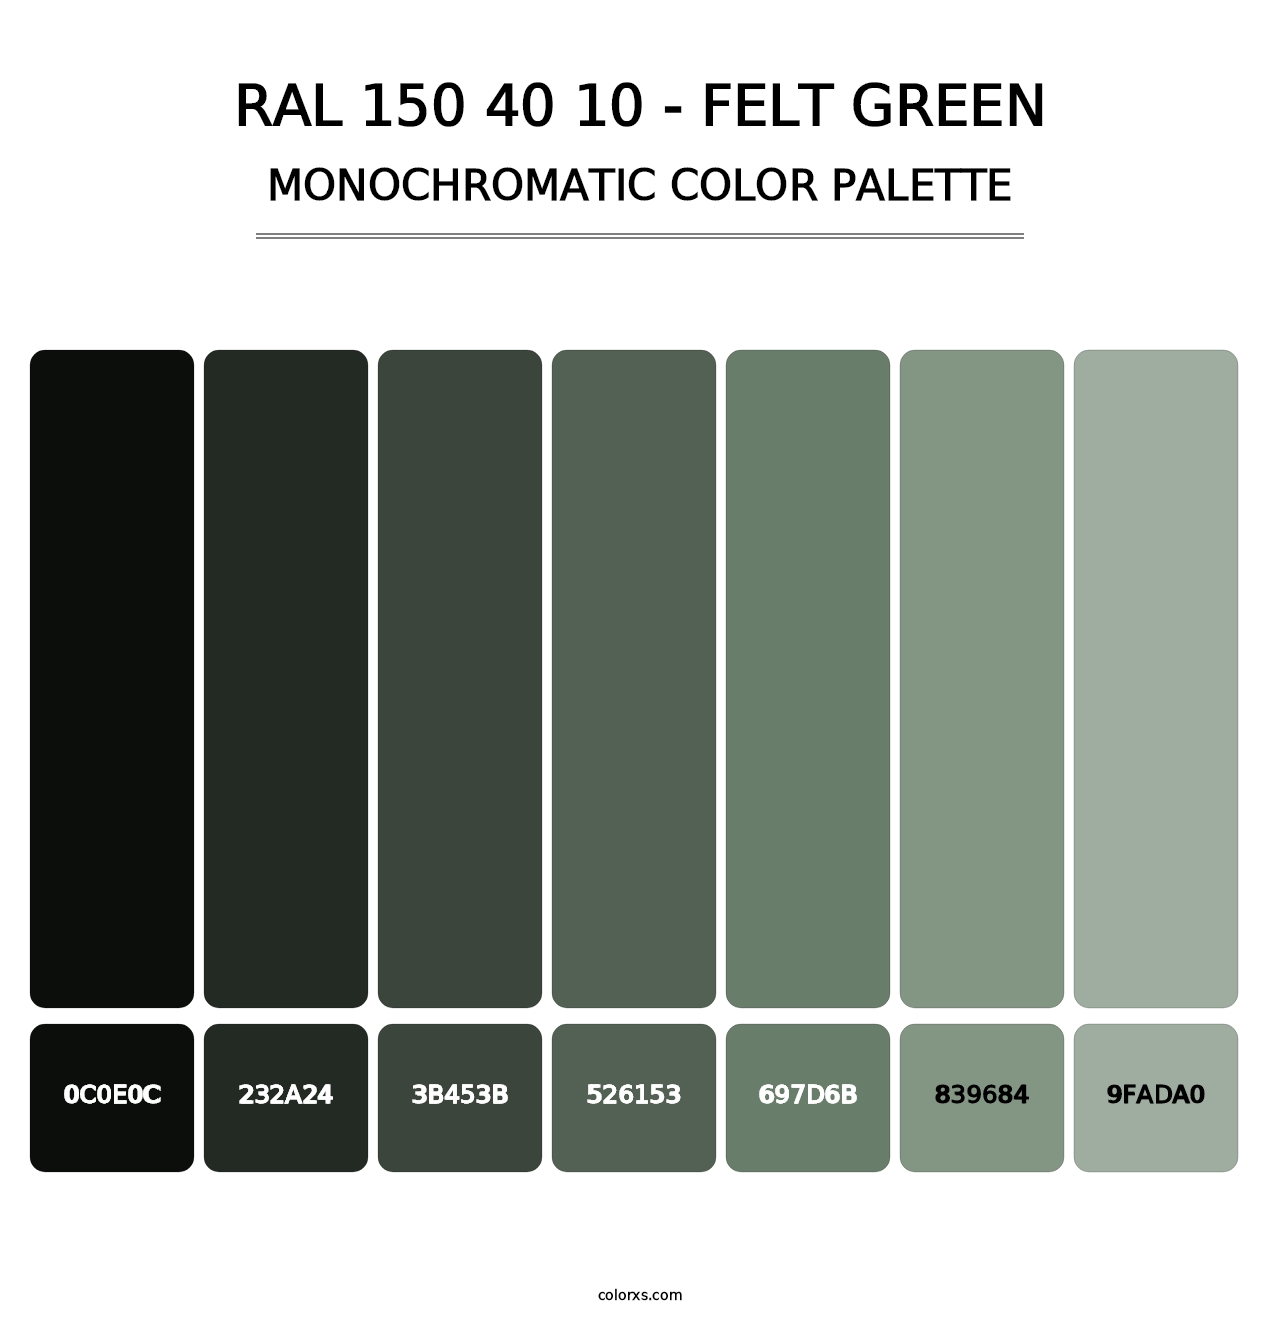 RAL 150 40 10 - Felt Green - Monochromatic Color Palette